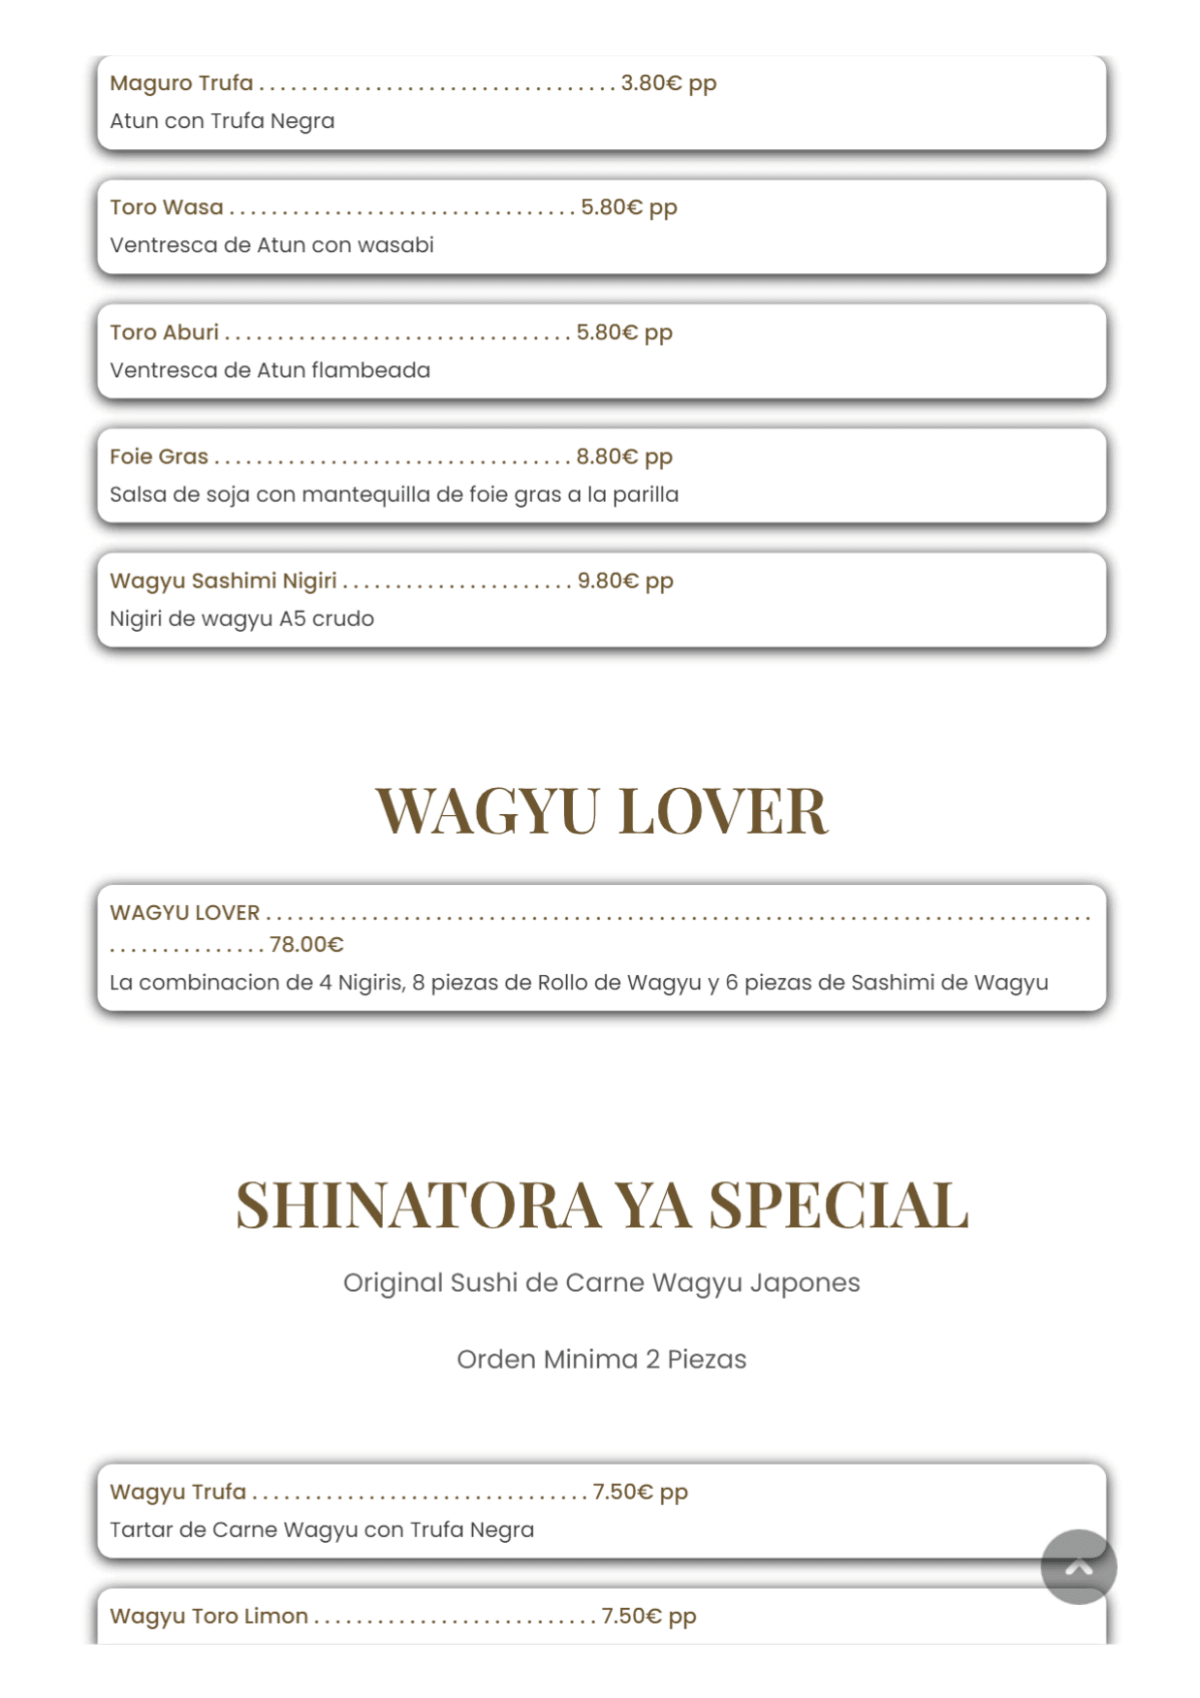 Shinatora Ya menu